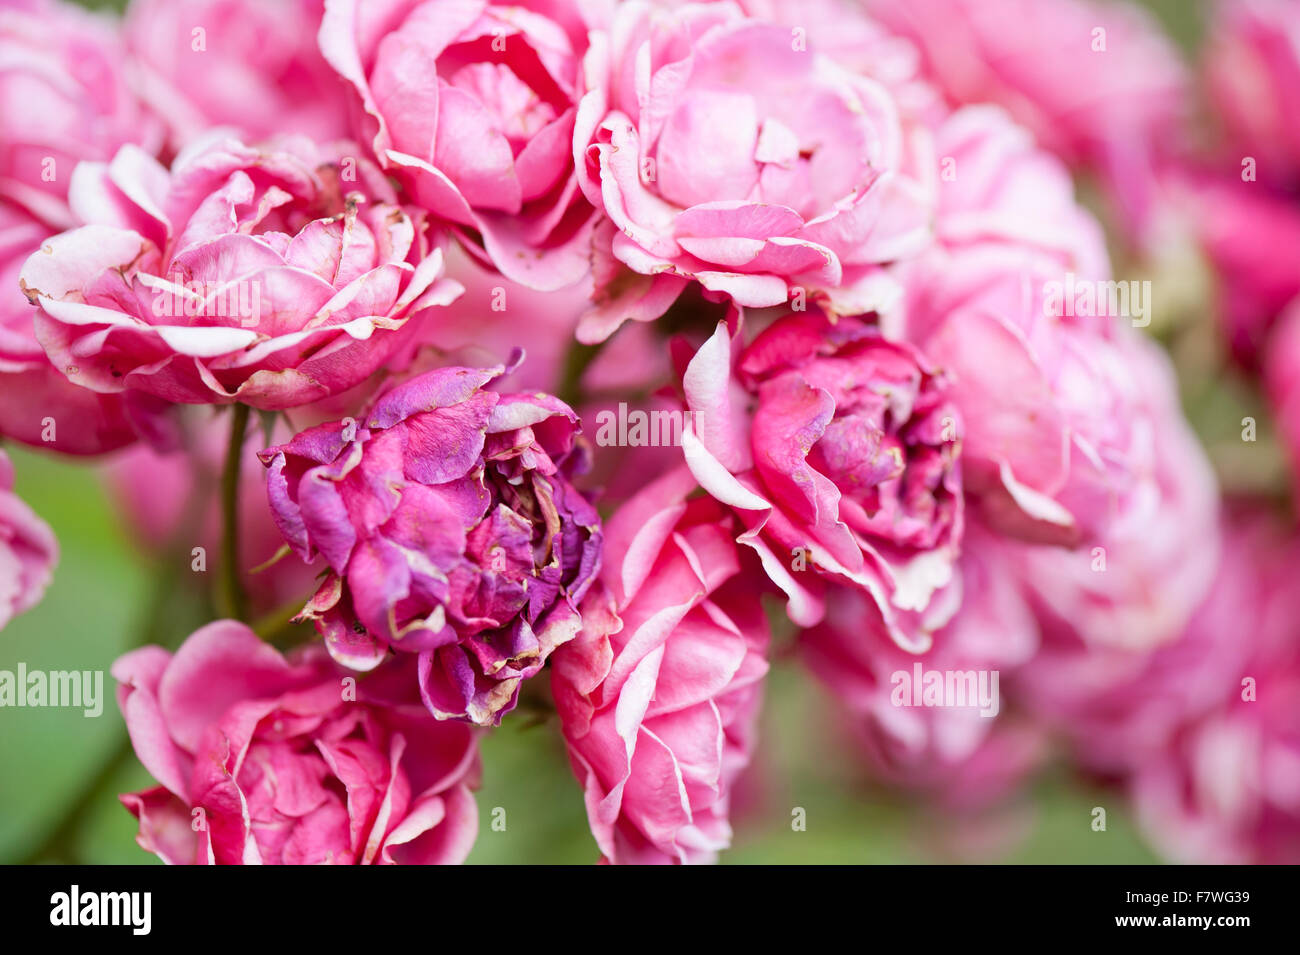 Vernichtenden rosa Rosen, rosa Blüten im Juli, abklingen Schuppen Blüten Pflanze wächst in polnischen Ziergarten, Blumen-Bündel Stockfoto